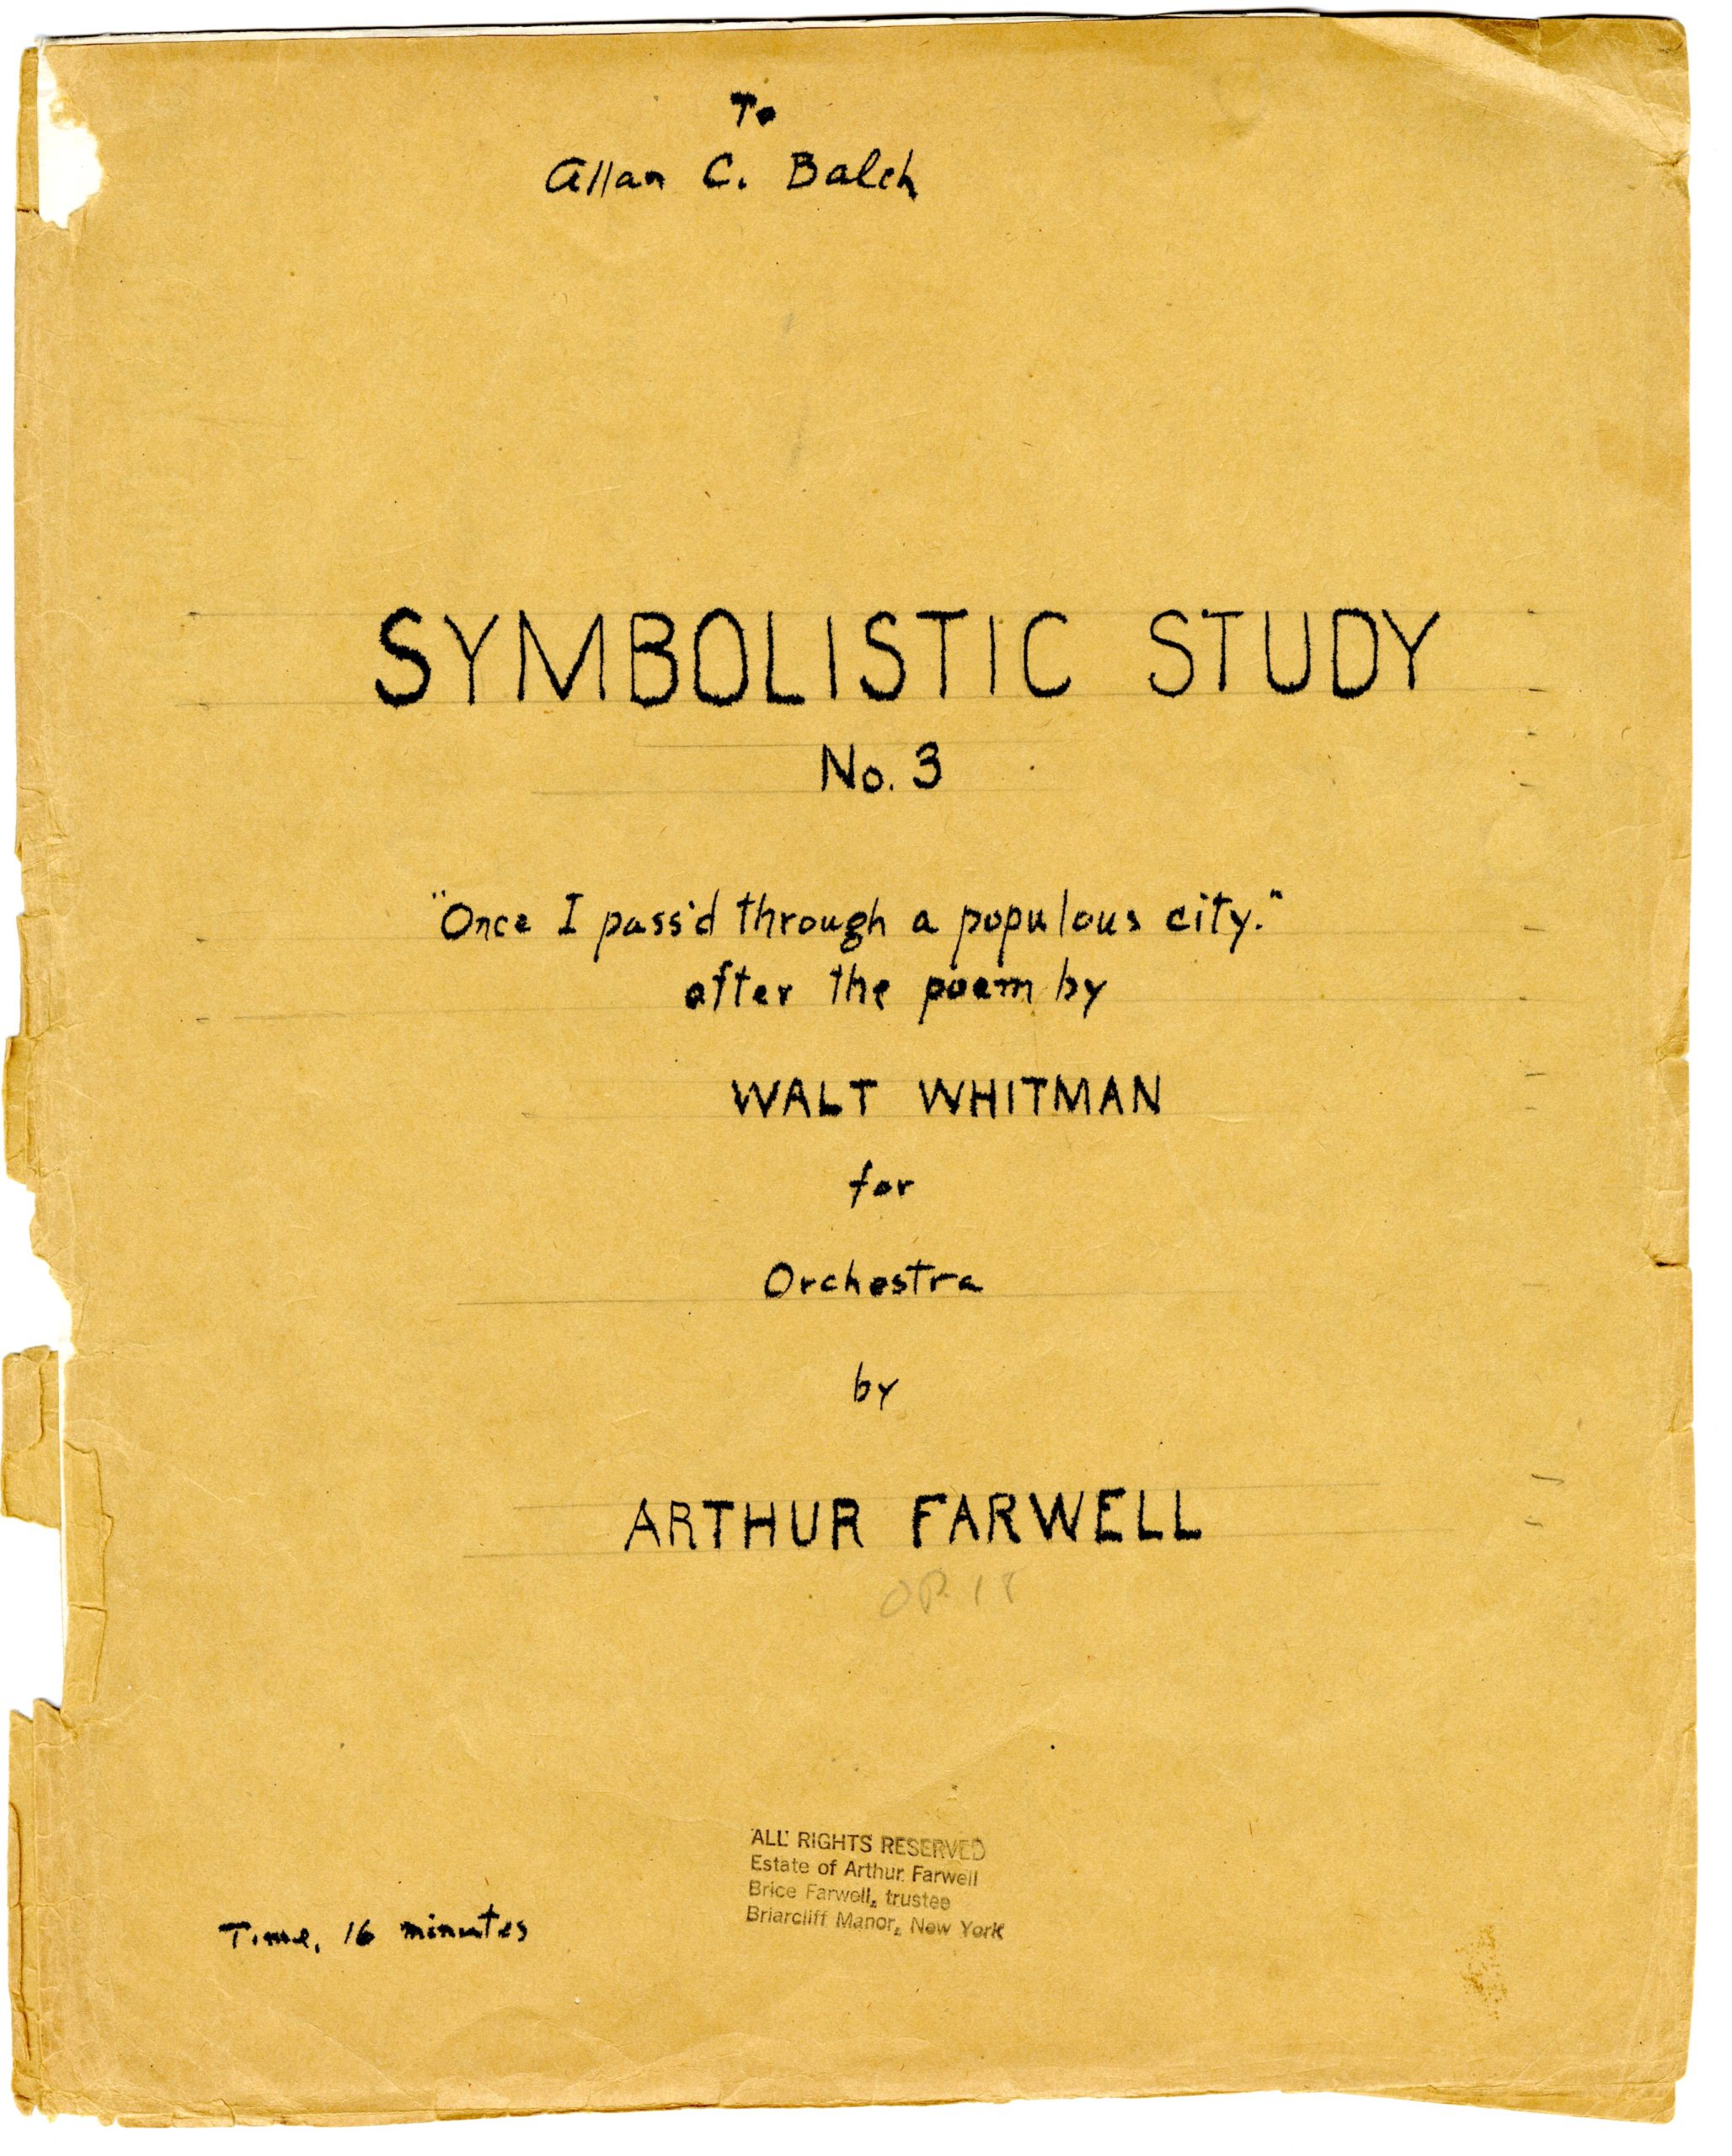 Cover page for Symbolic Study No. 3 score.